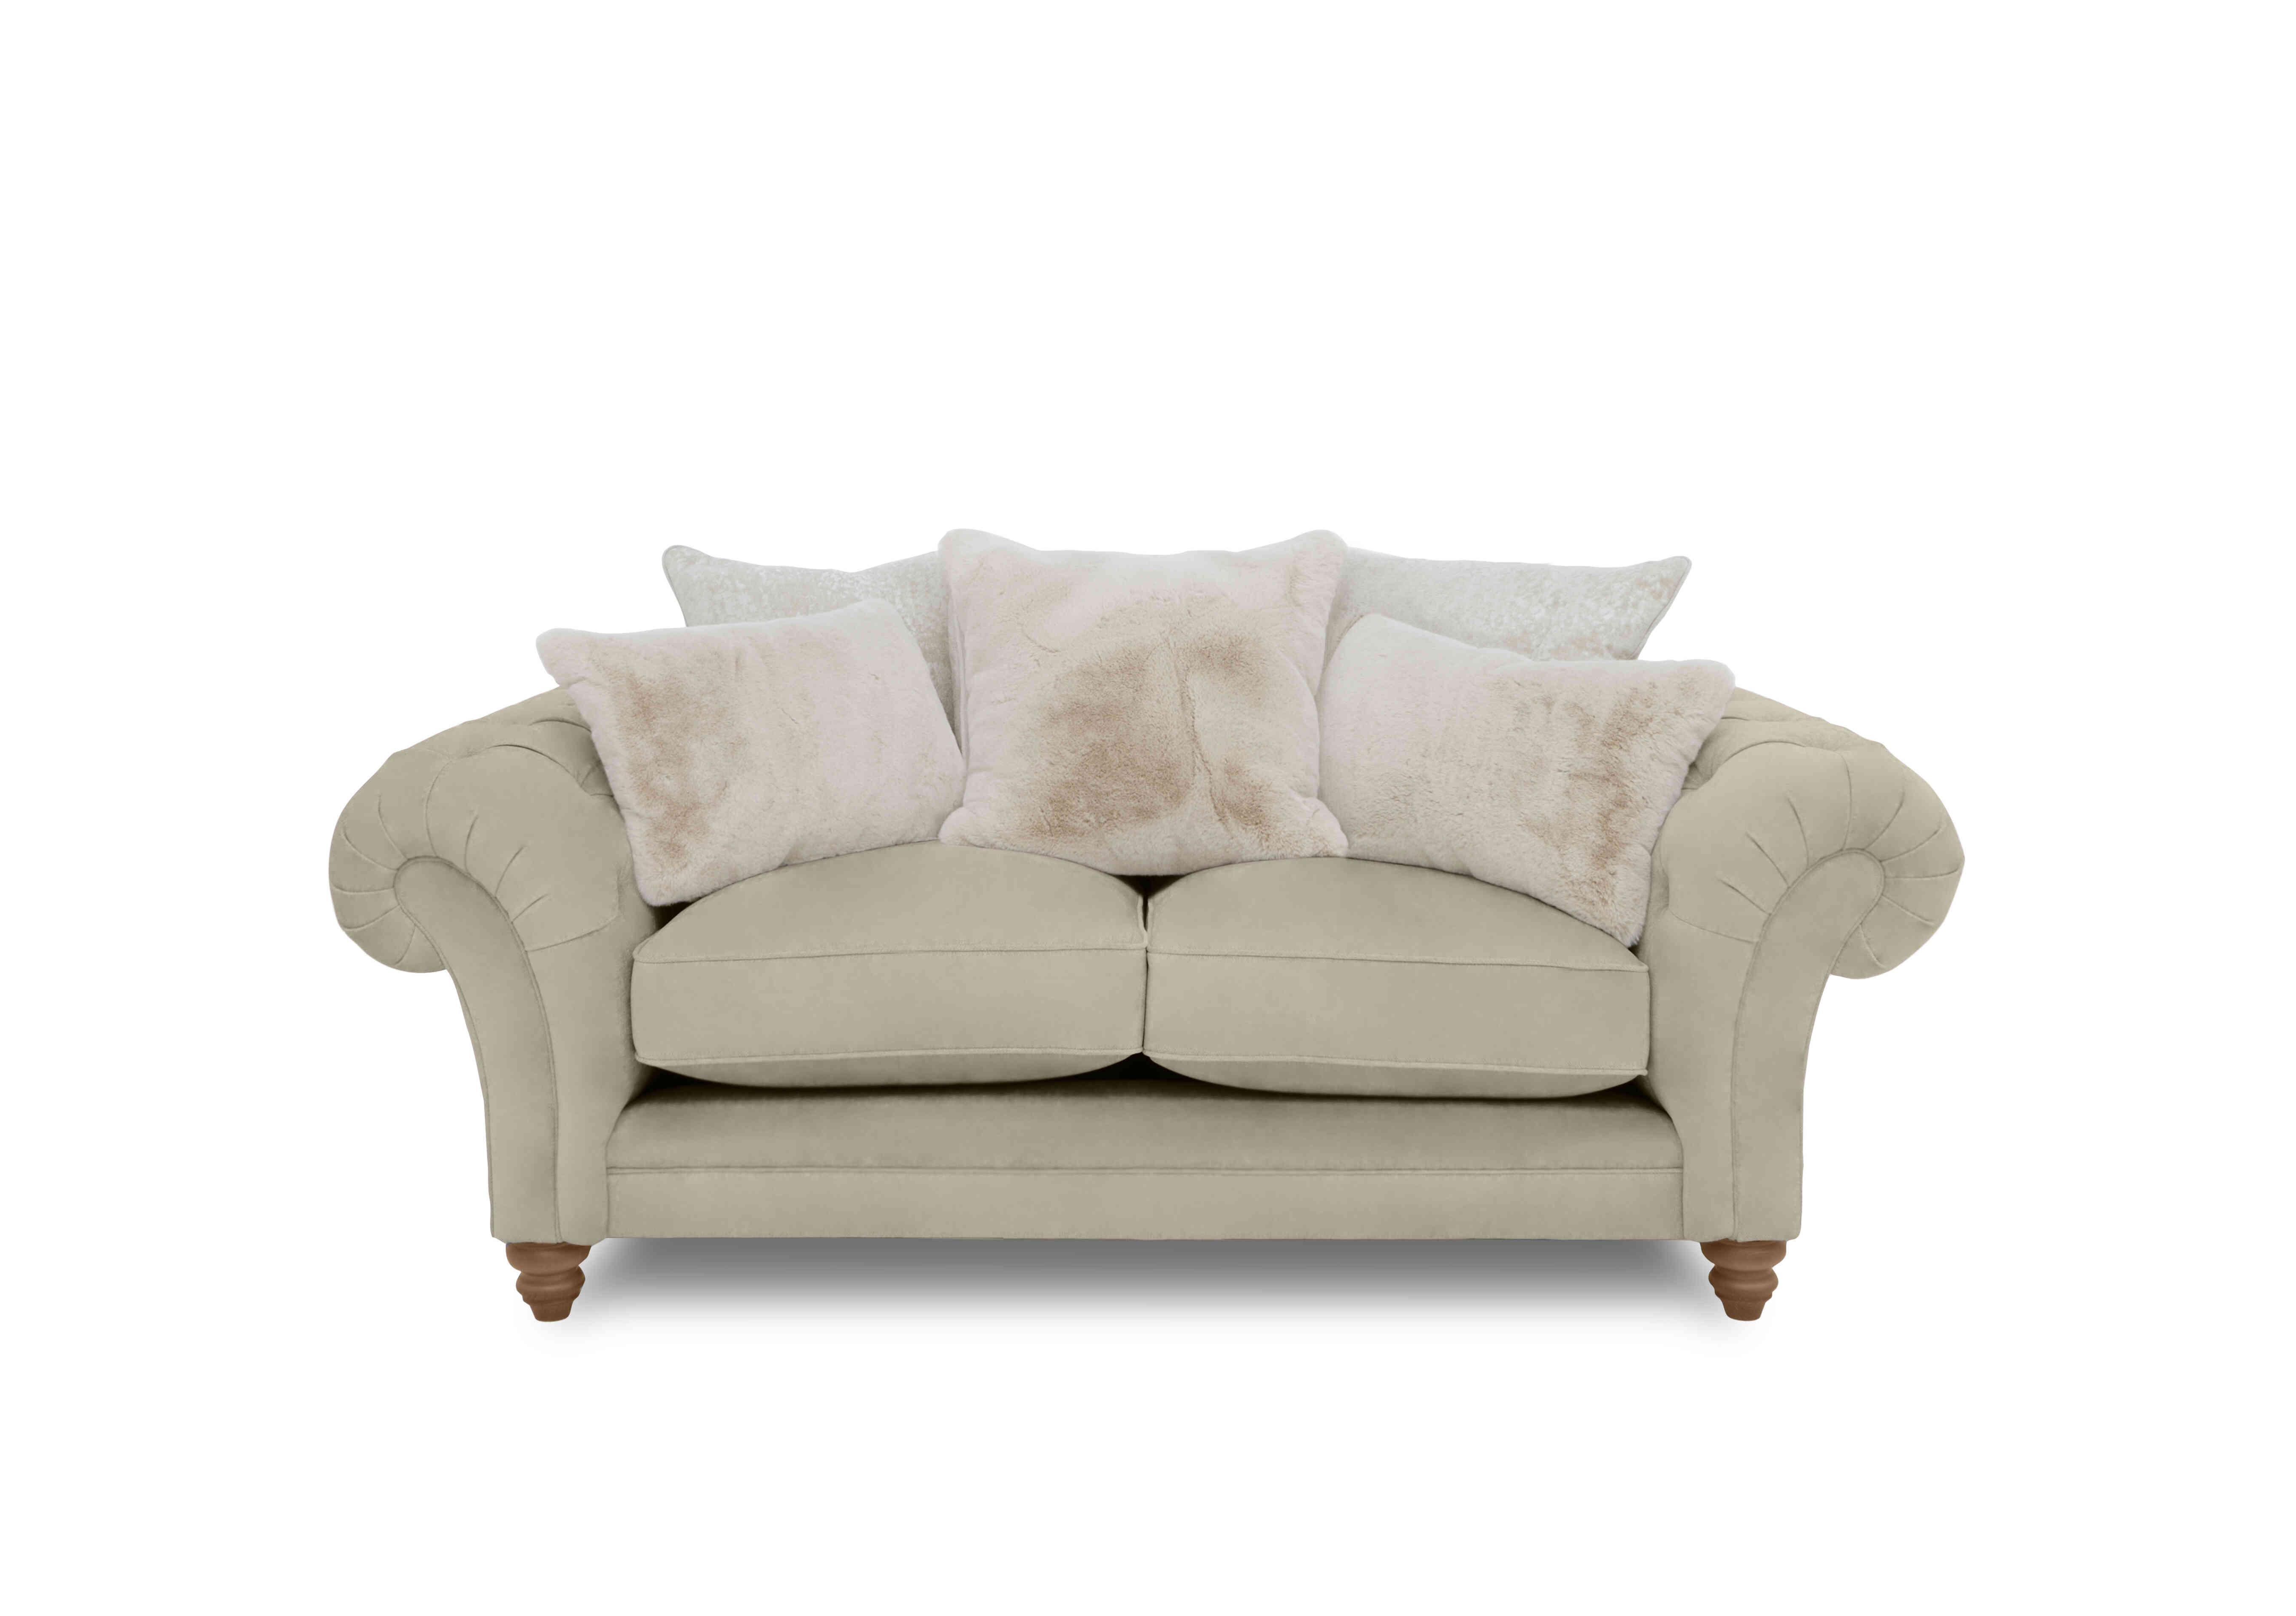 Blenheim 2 Seater Scatter Back Sofa in Marlborough Wicker Ivory Of on Furniture Village